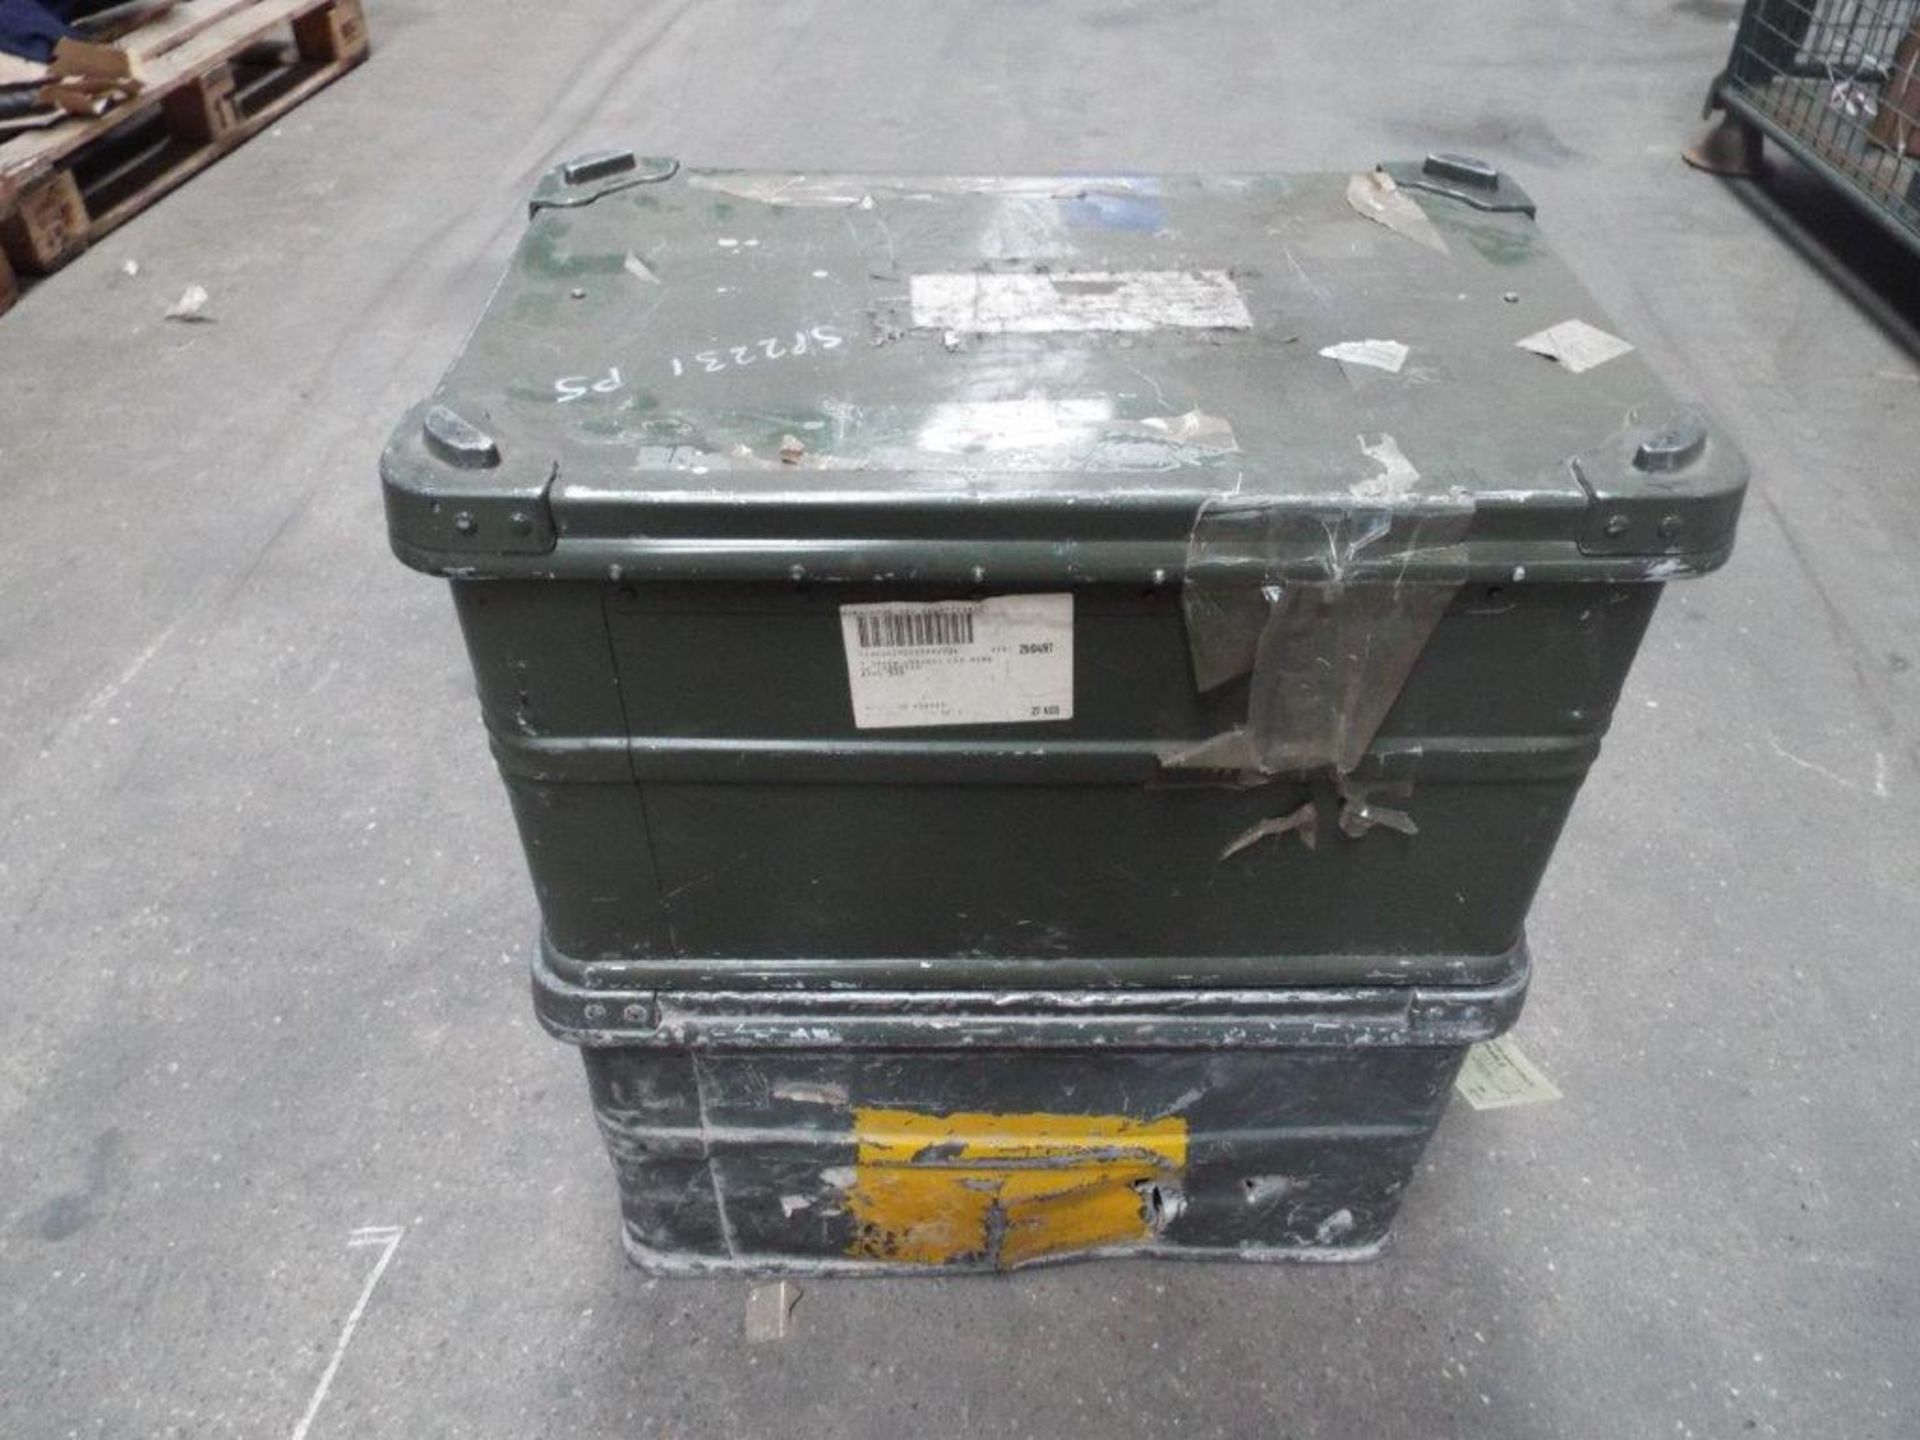 2 x Heavy Duty Zarges Aluminium Cases - Image 6 of 8